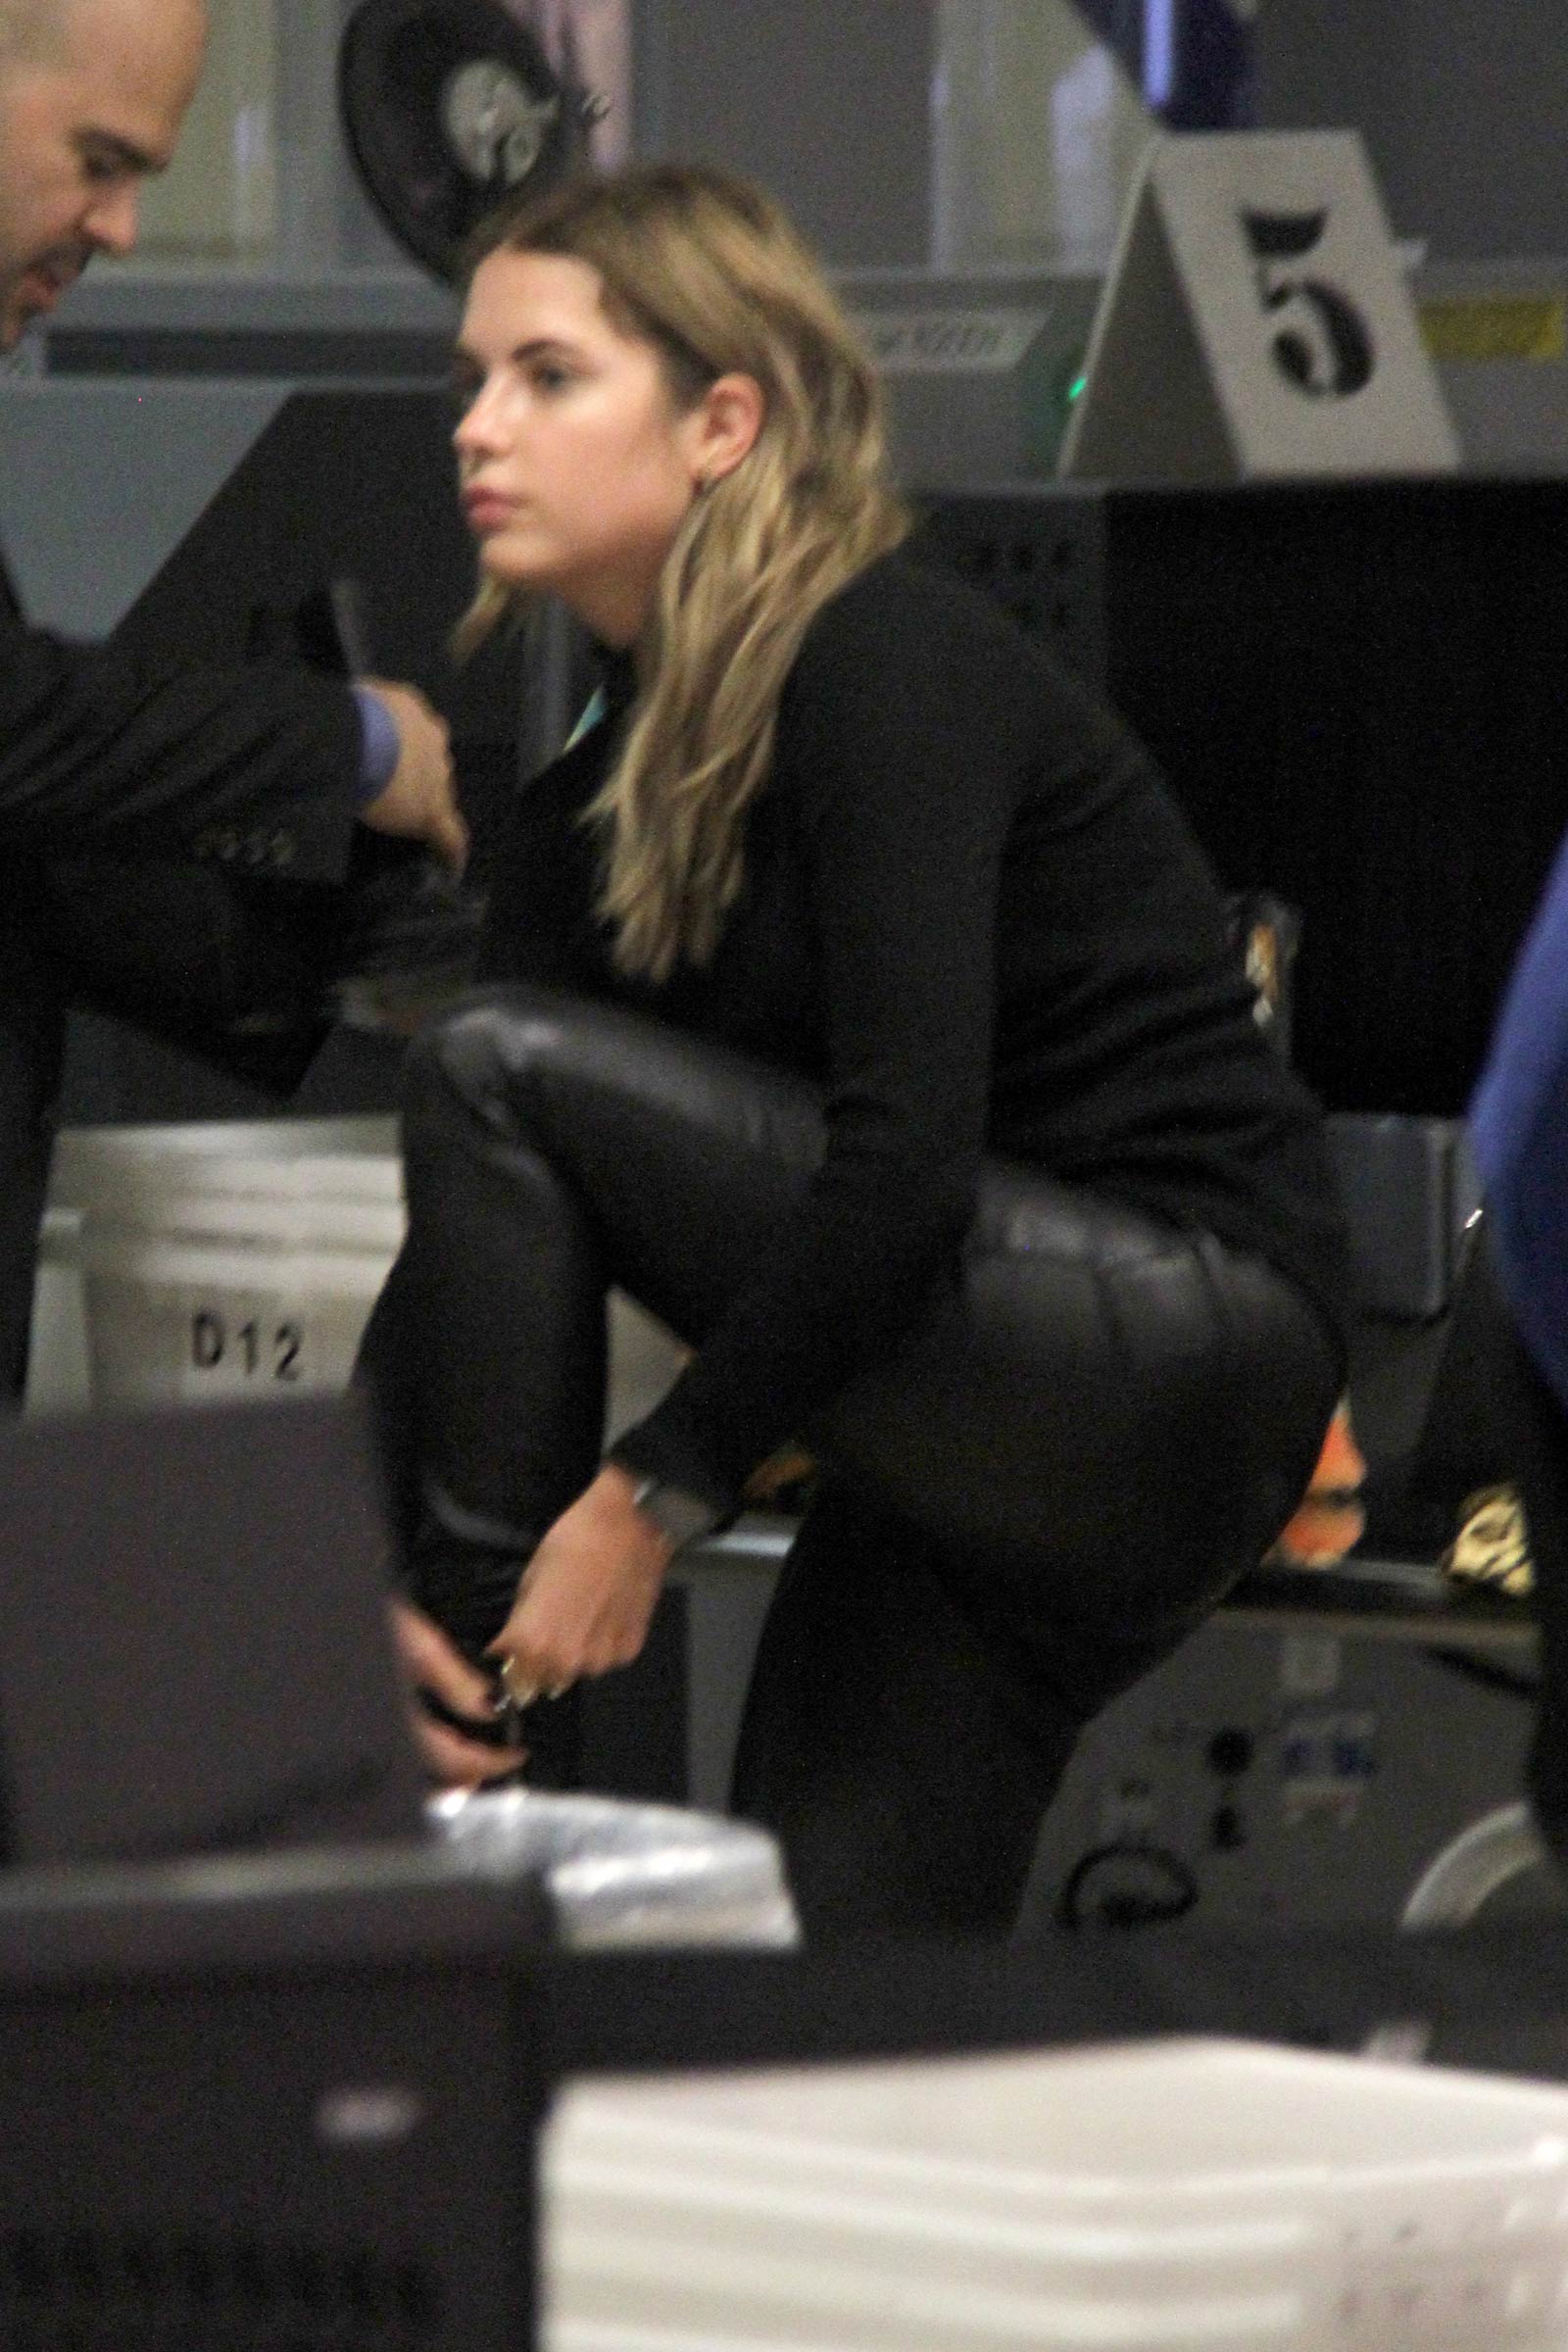 Ashley Benson at LAX airport